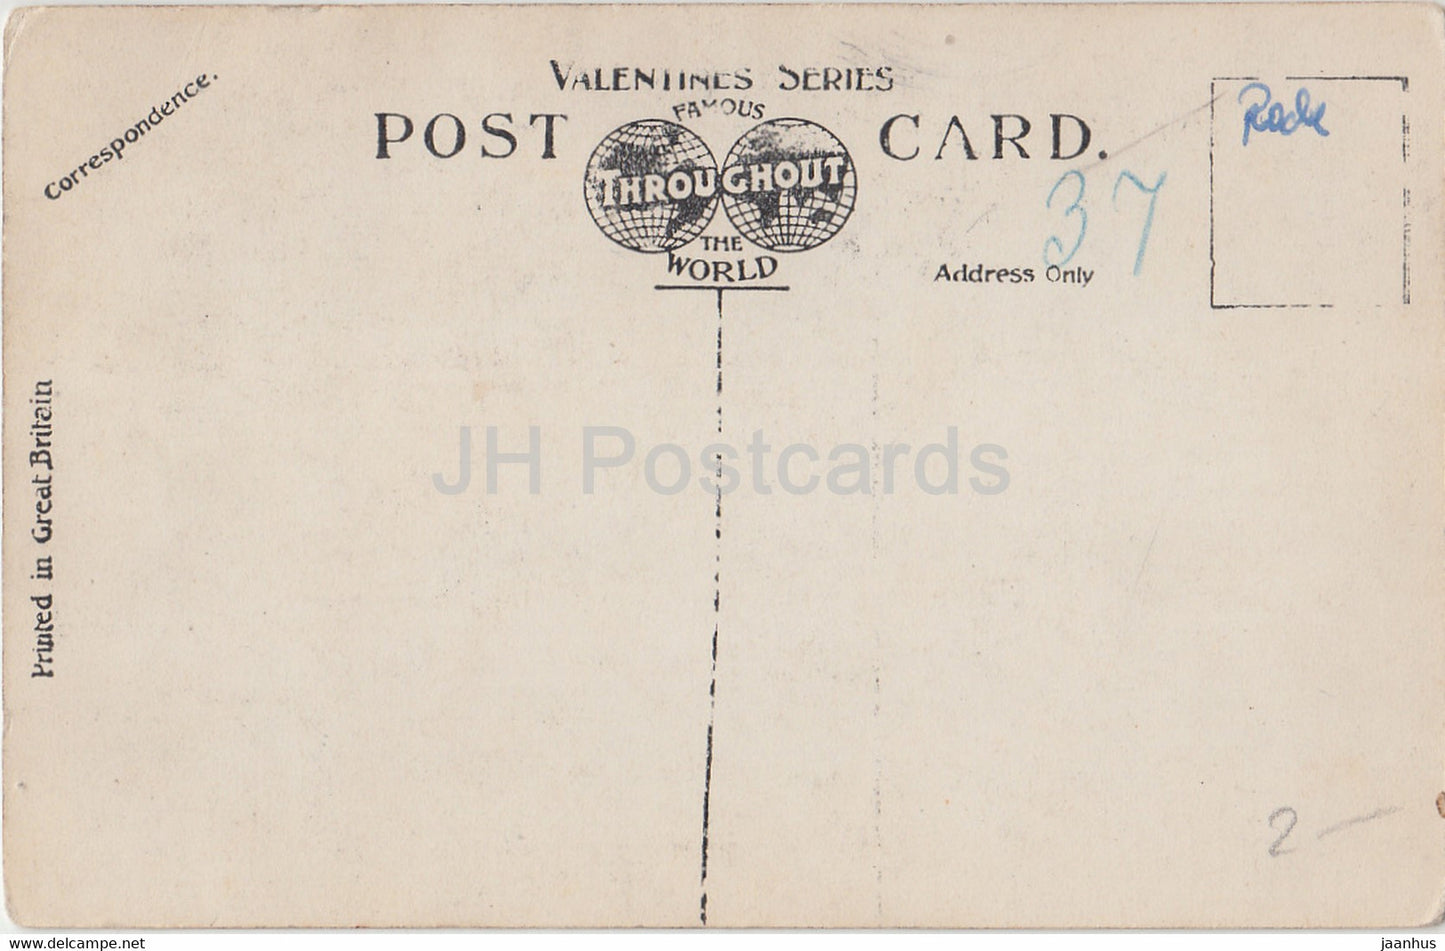 London - Shakespeare's Monument - Westminster Abbey - Valentine - old postcard - England - United Kingdom - used